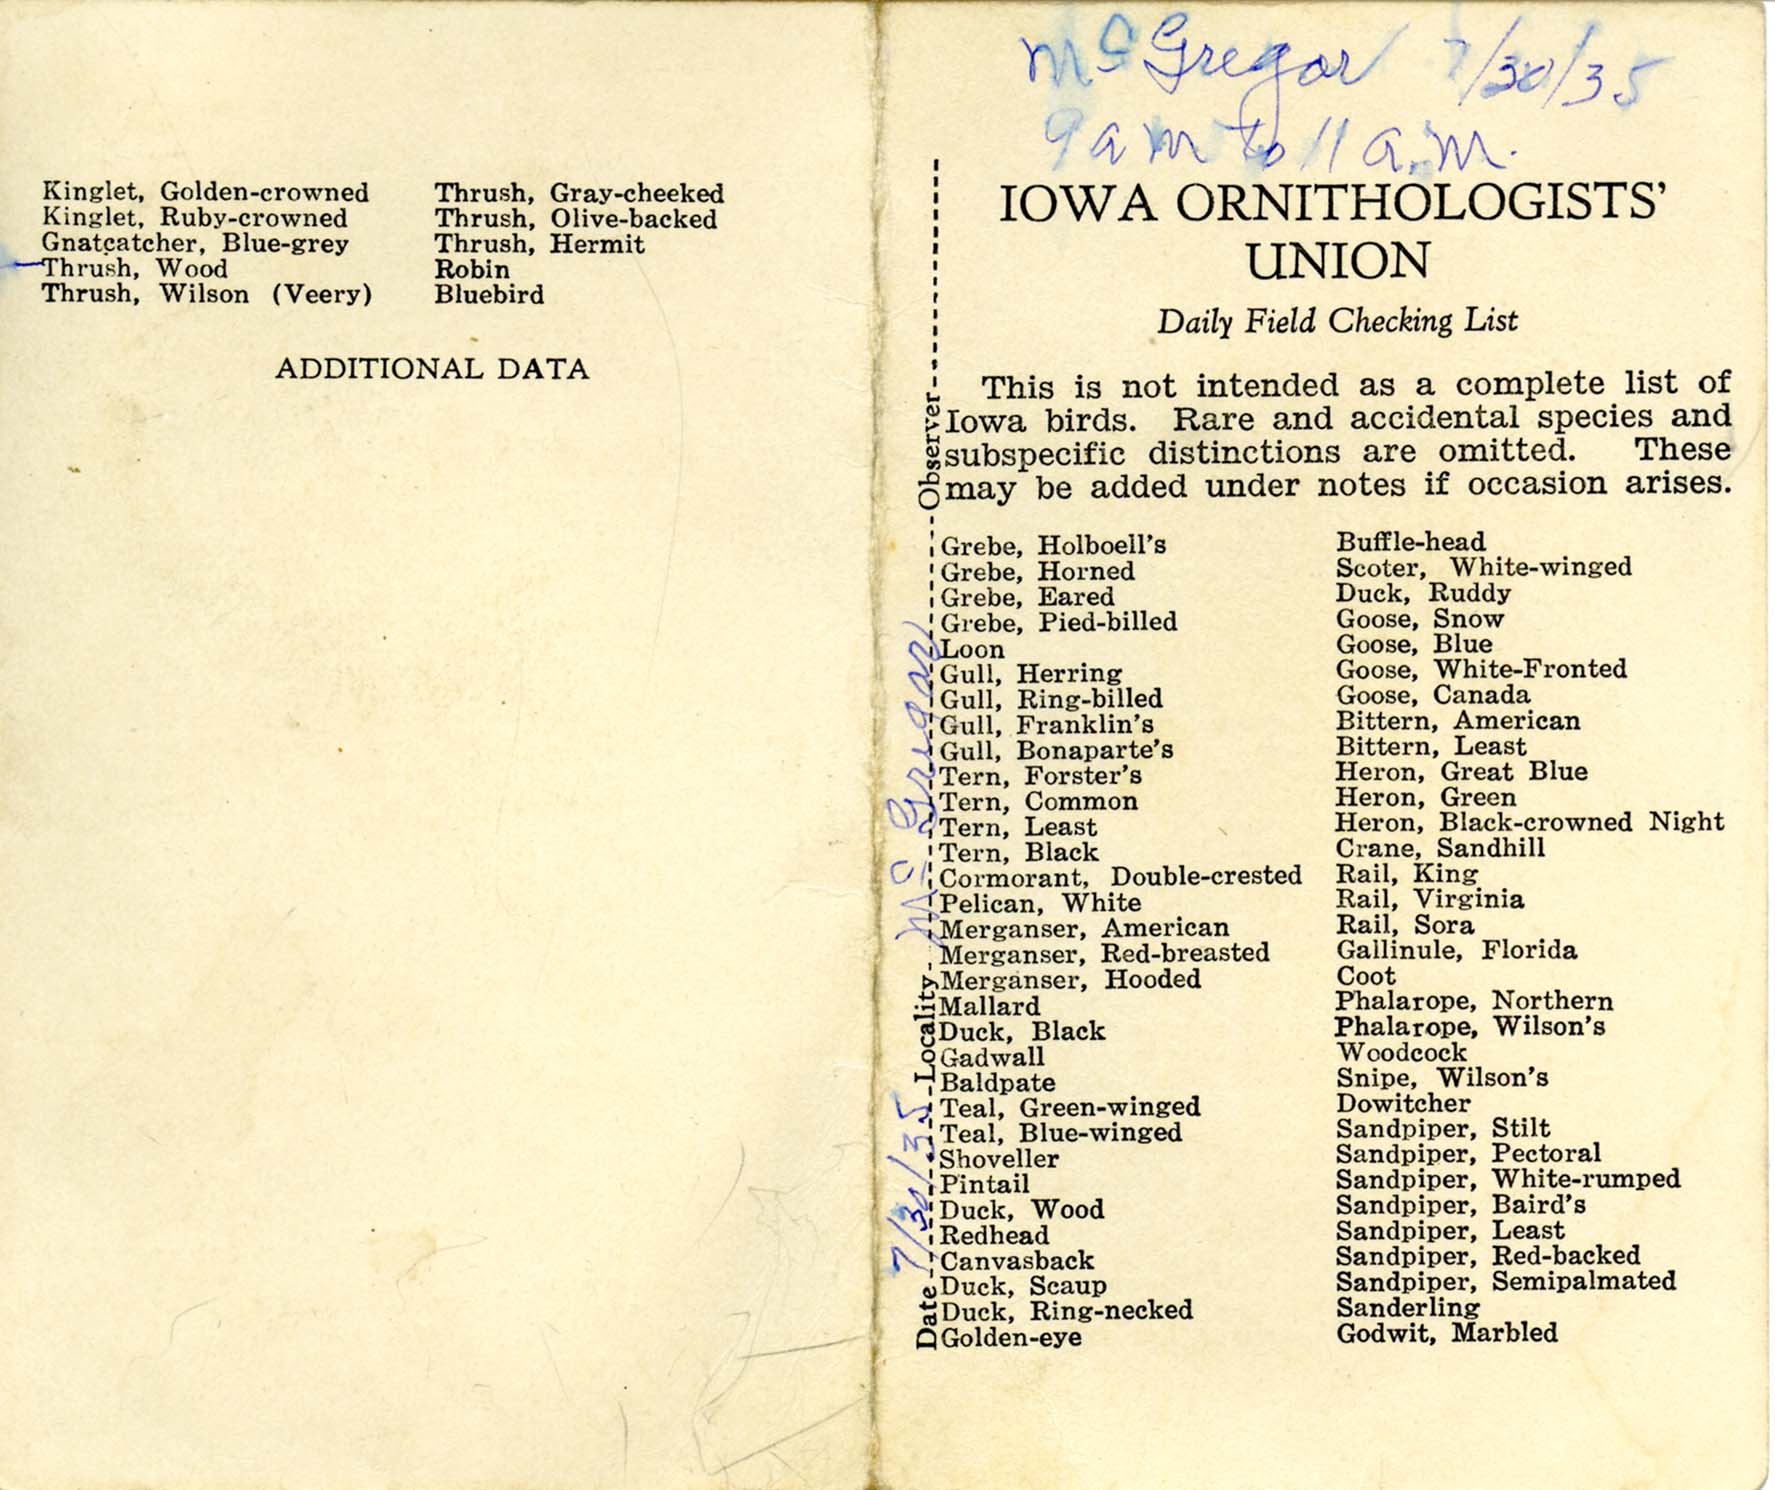 Daily field checking list, Walter Rosene, July 30, 1935